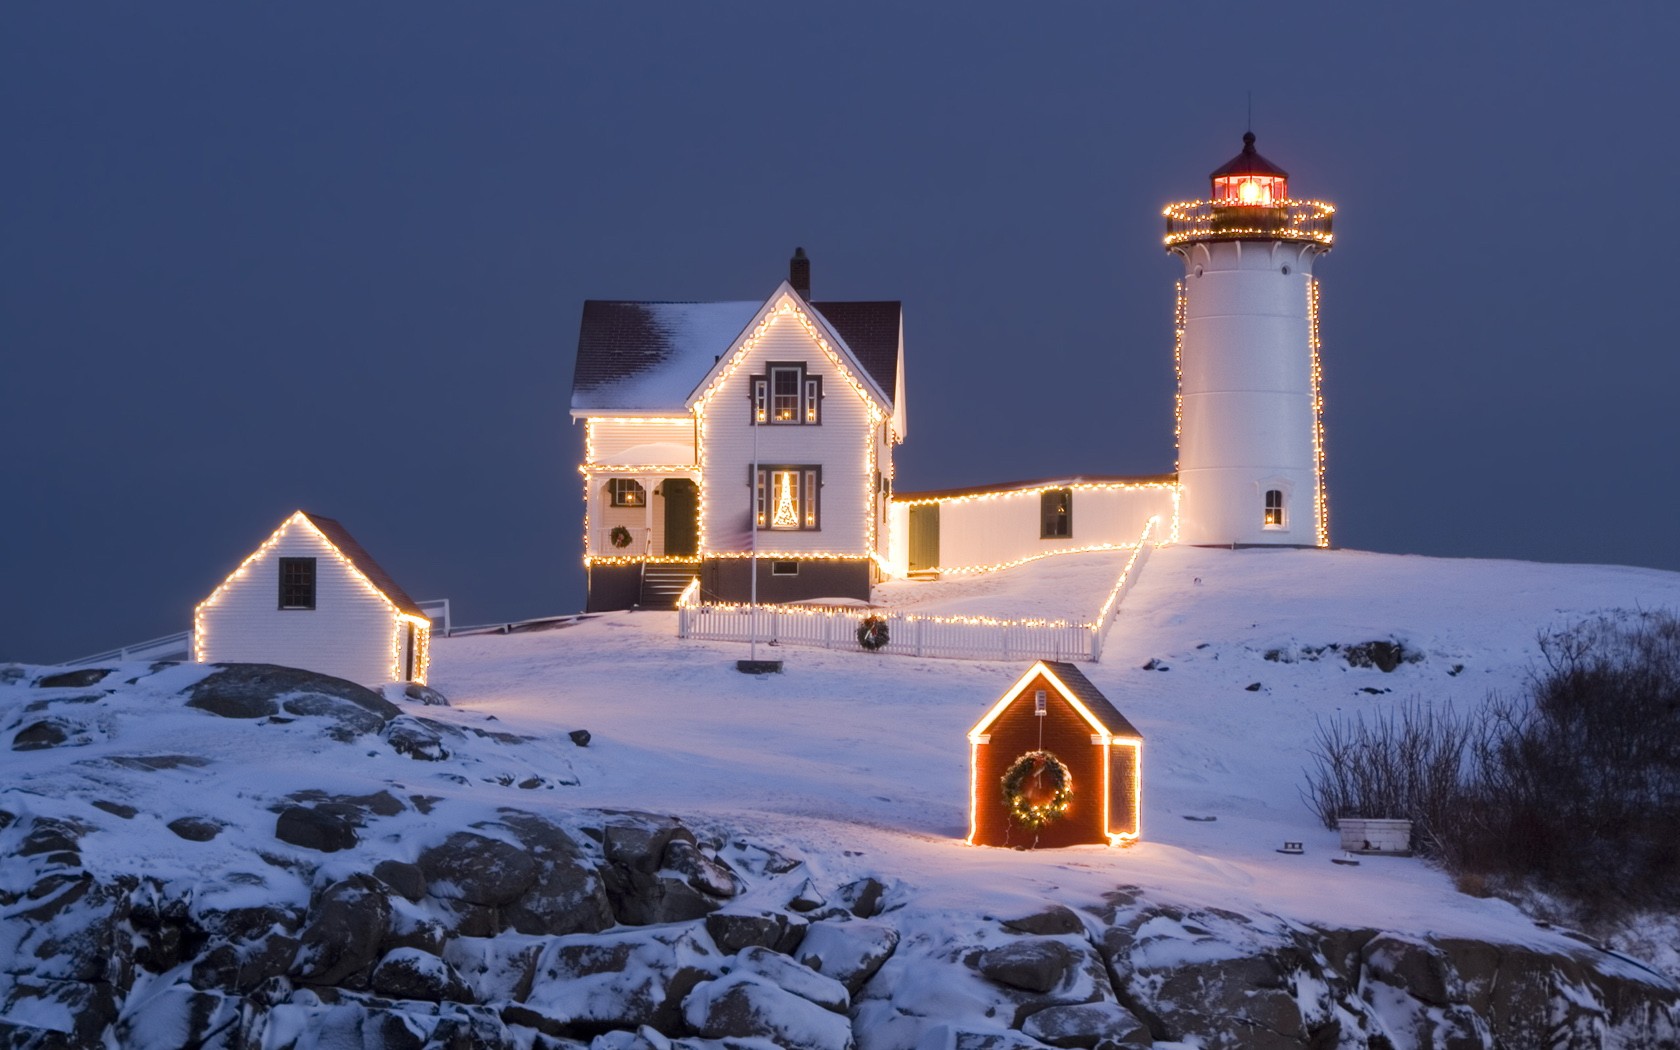 General 1680x1050 house lighthouse lights night snow Christmas lights winter calm Christmas idyllic